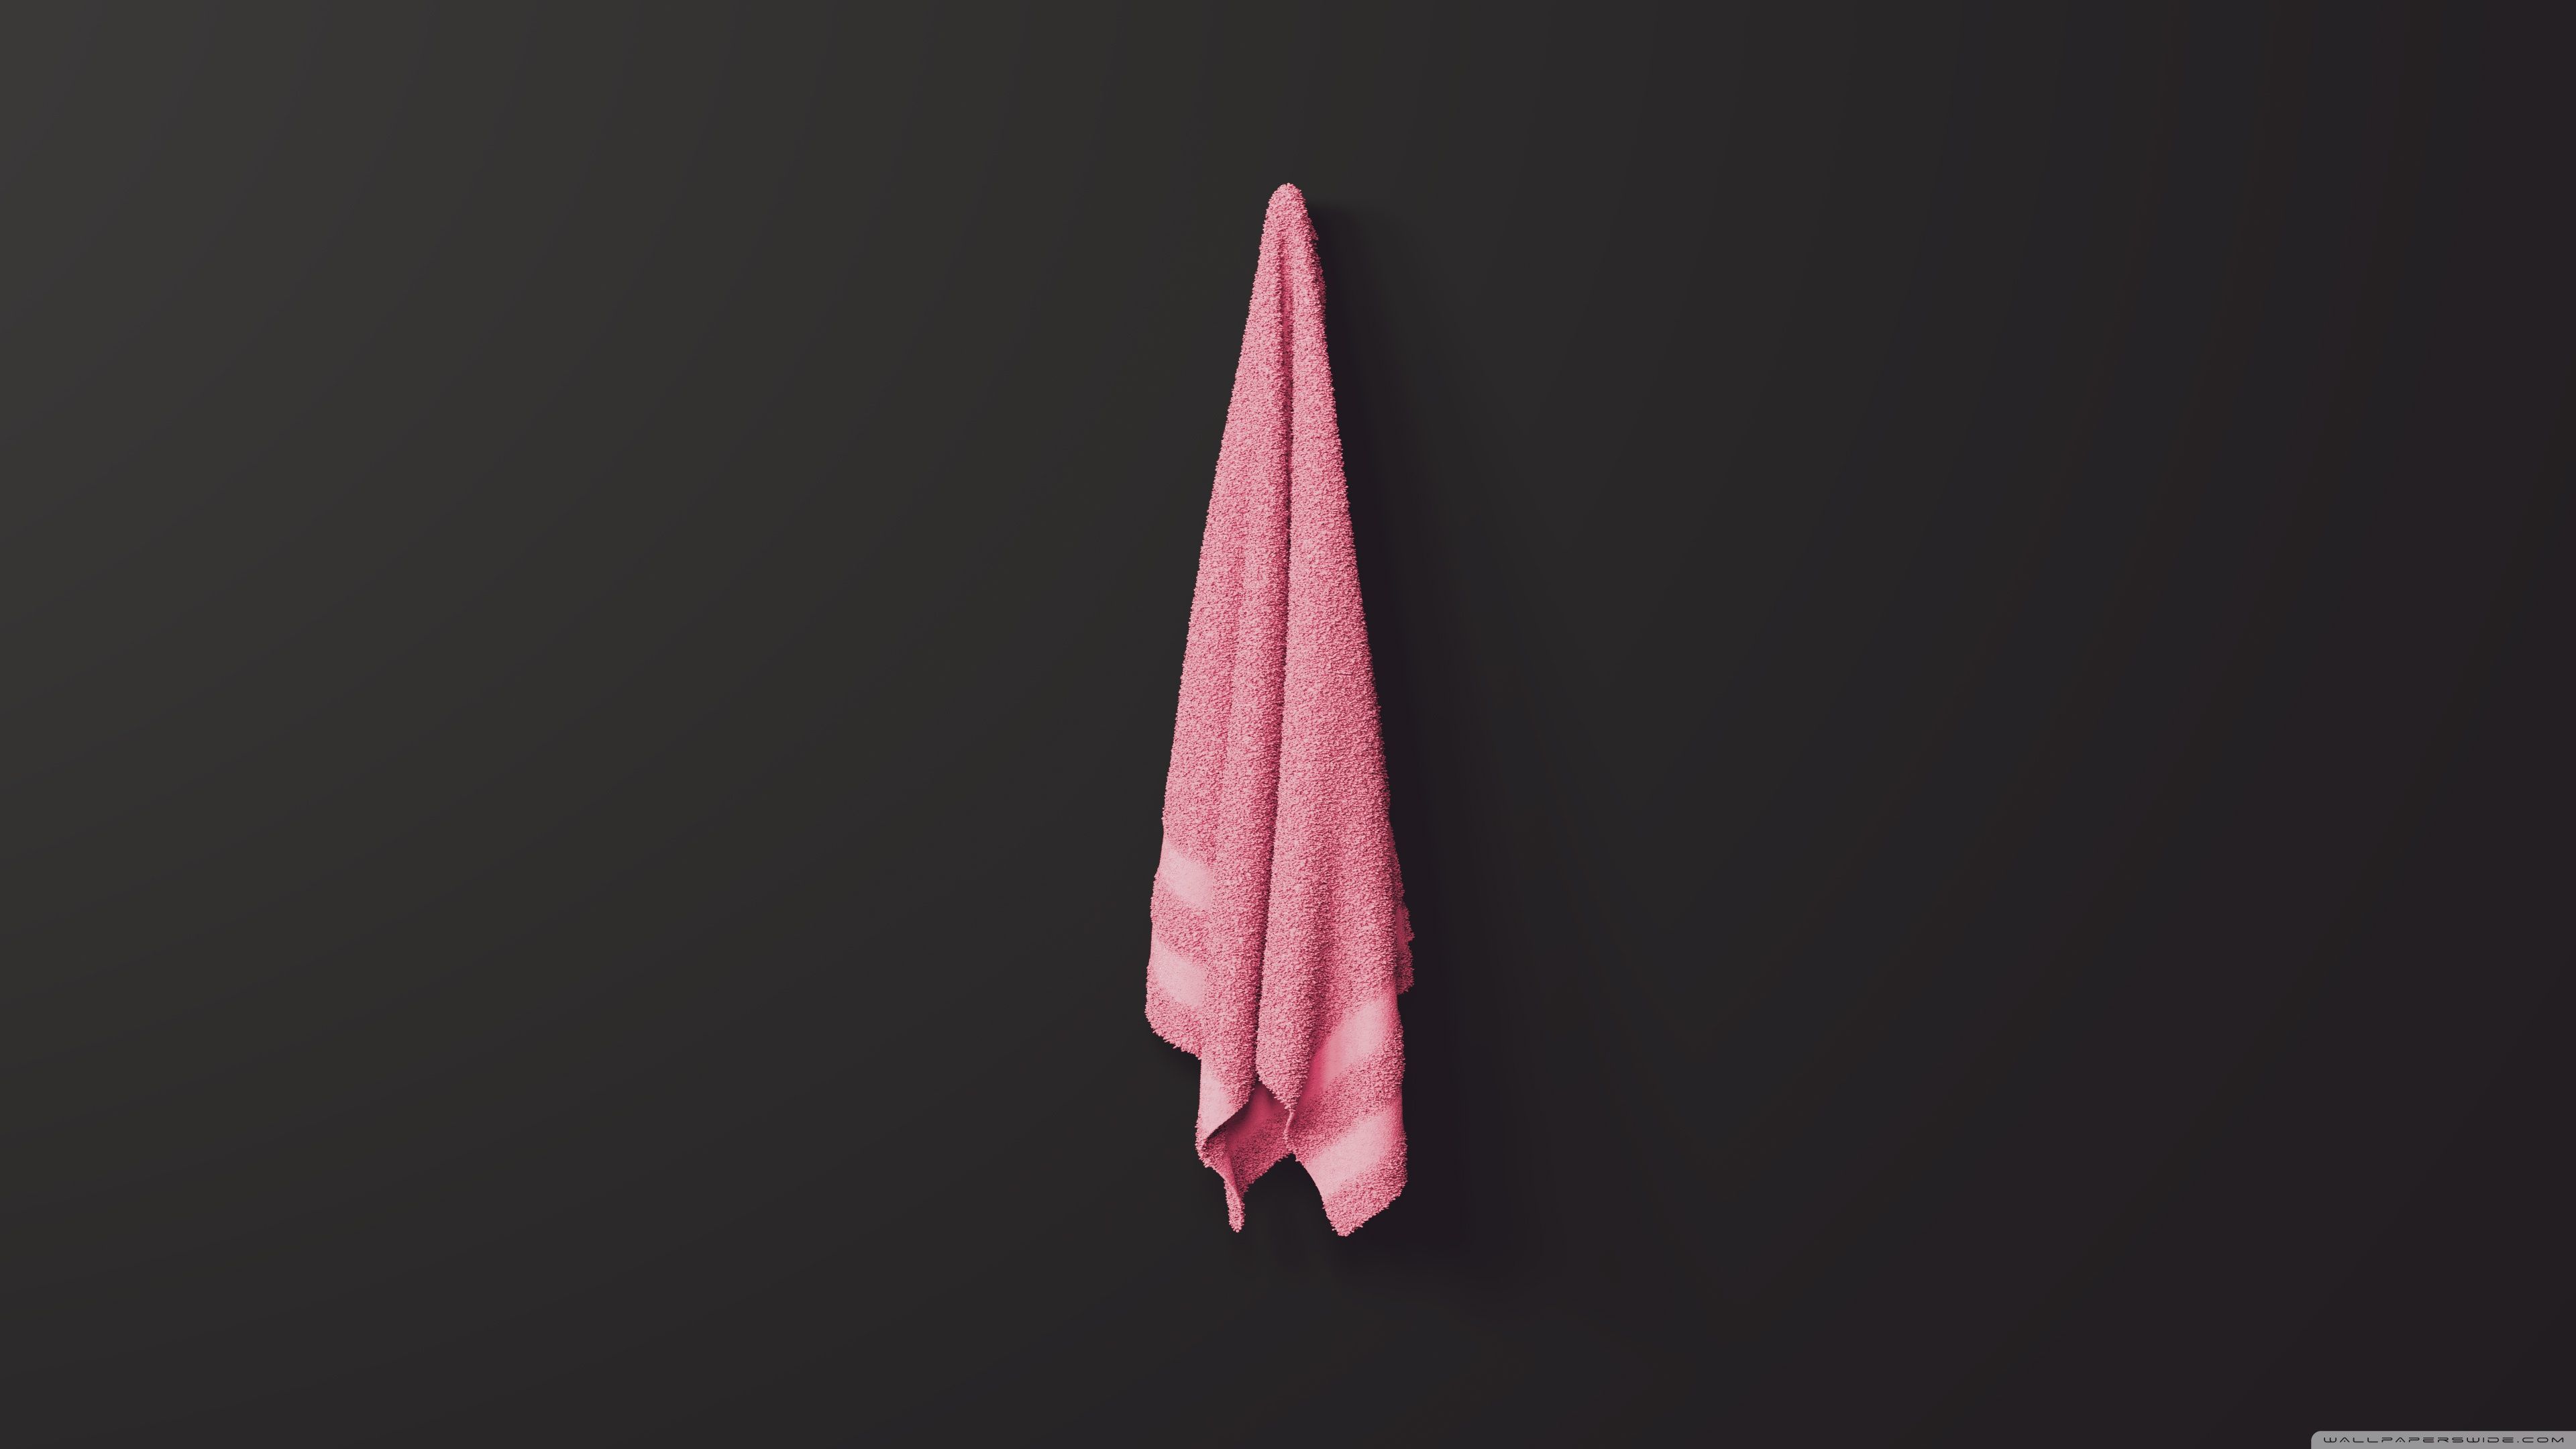 Minimal Towel Red 4K Ultra HD Desktop Background Wallpaper for 4K